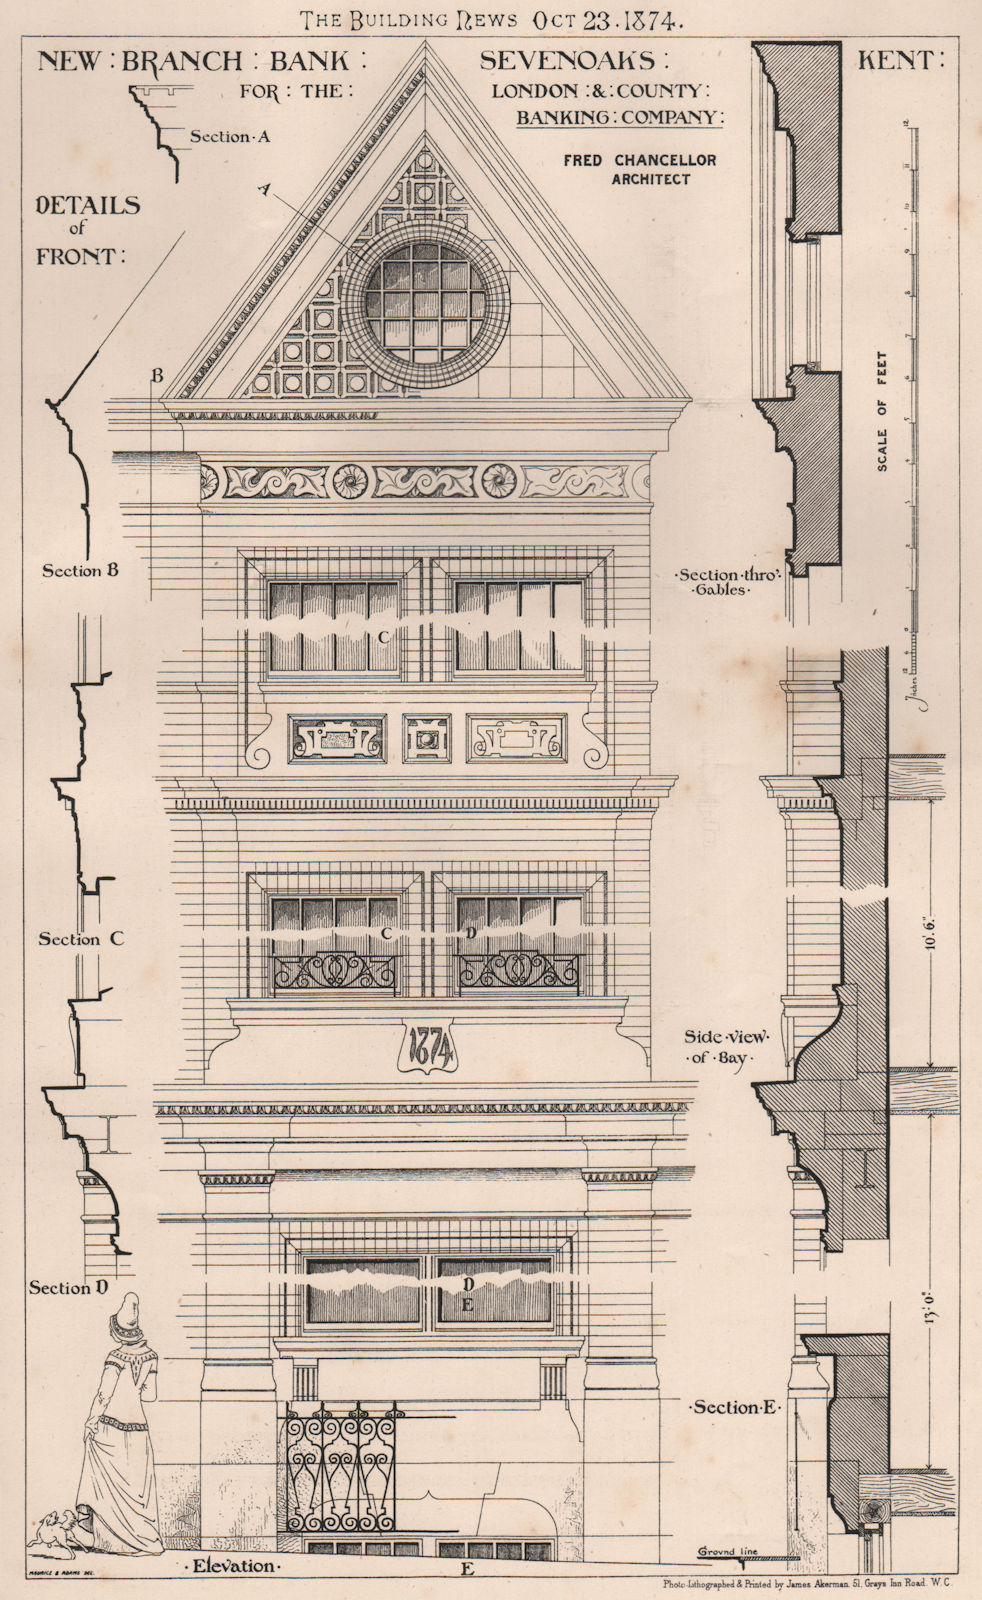 London & County Banking Company branch, Sevenoaks, Kent; Fred Chancellor 1874